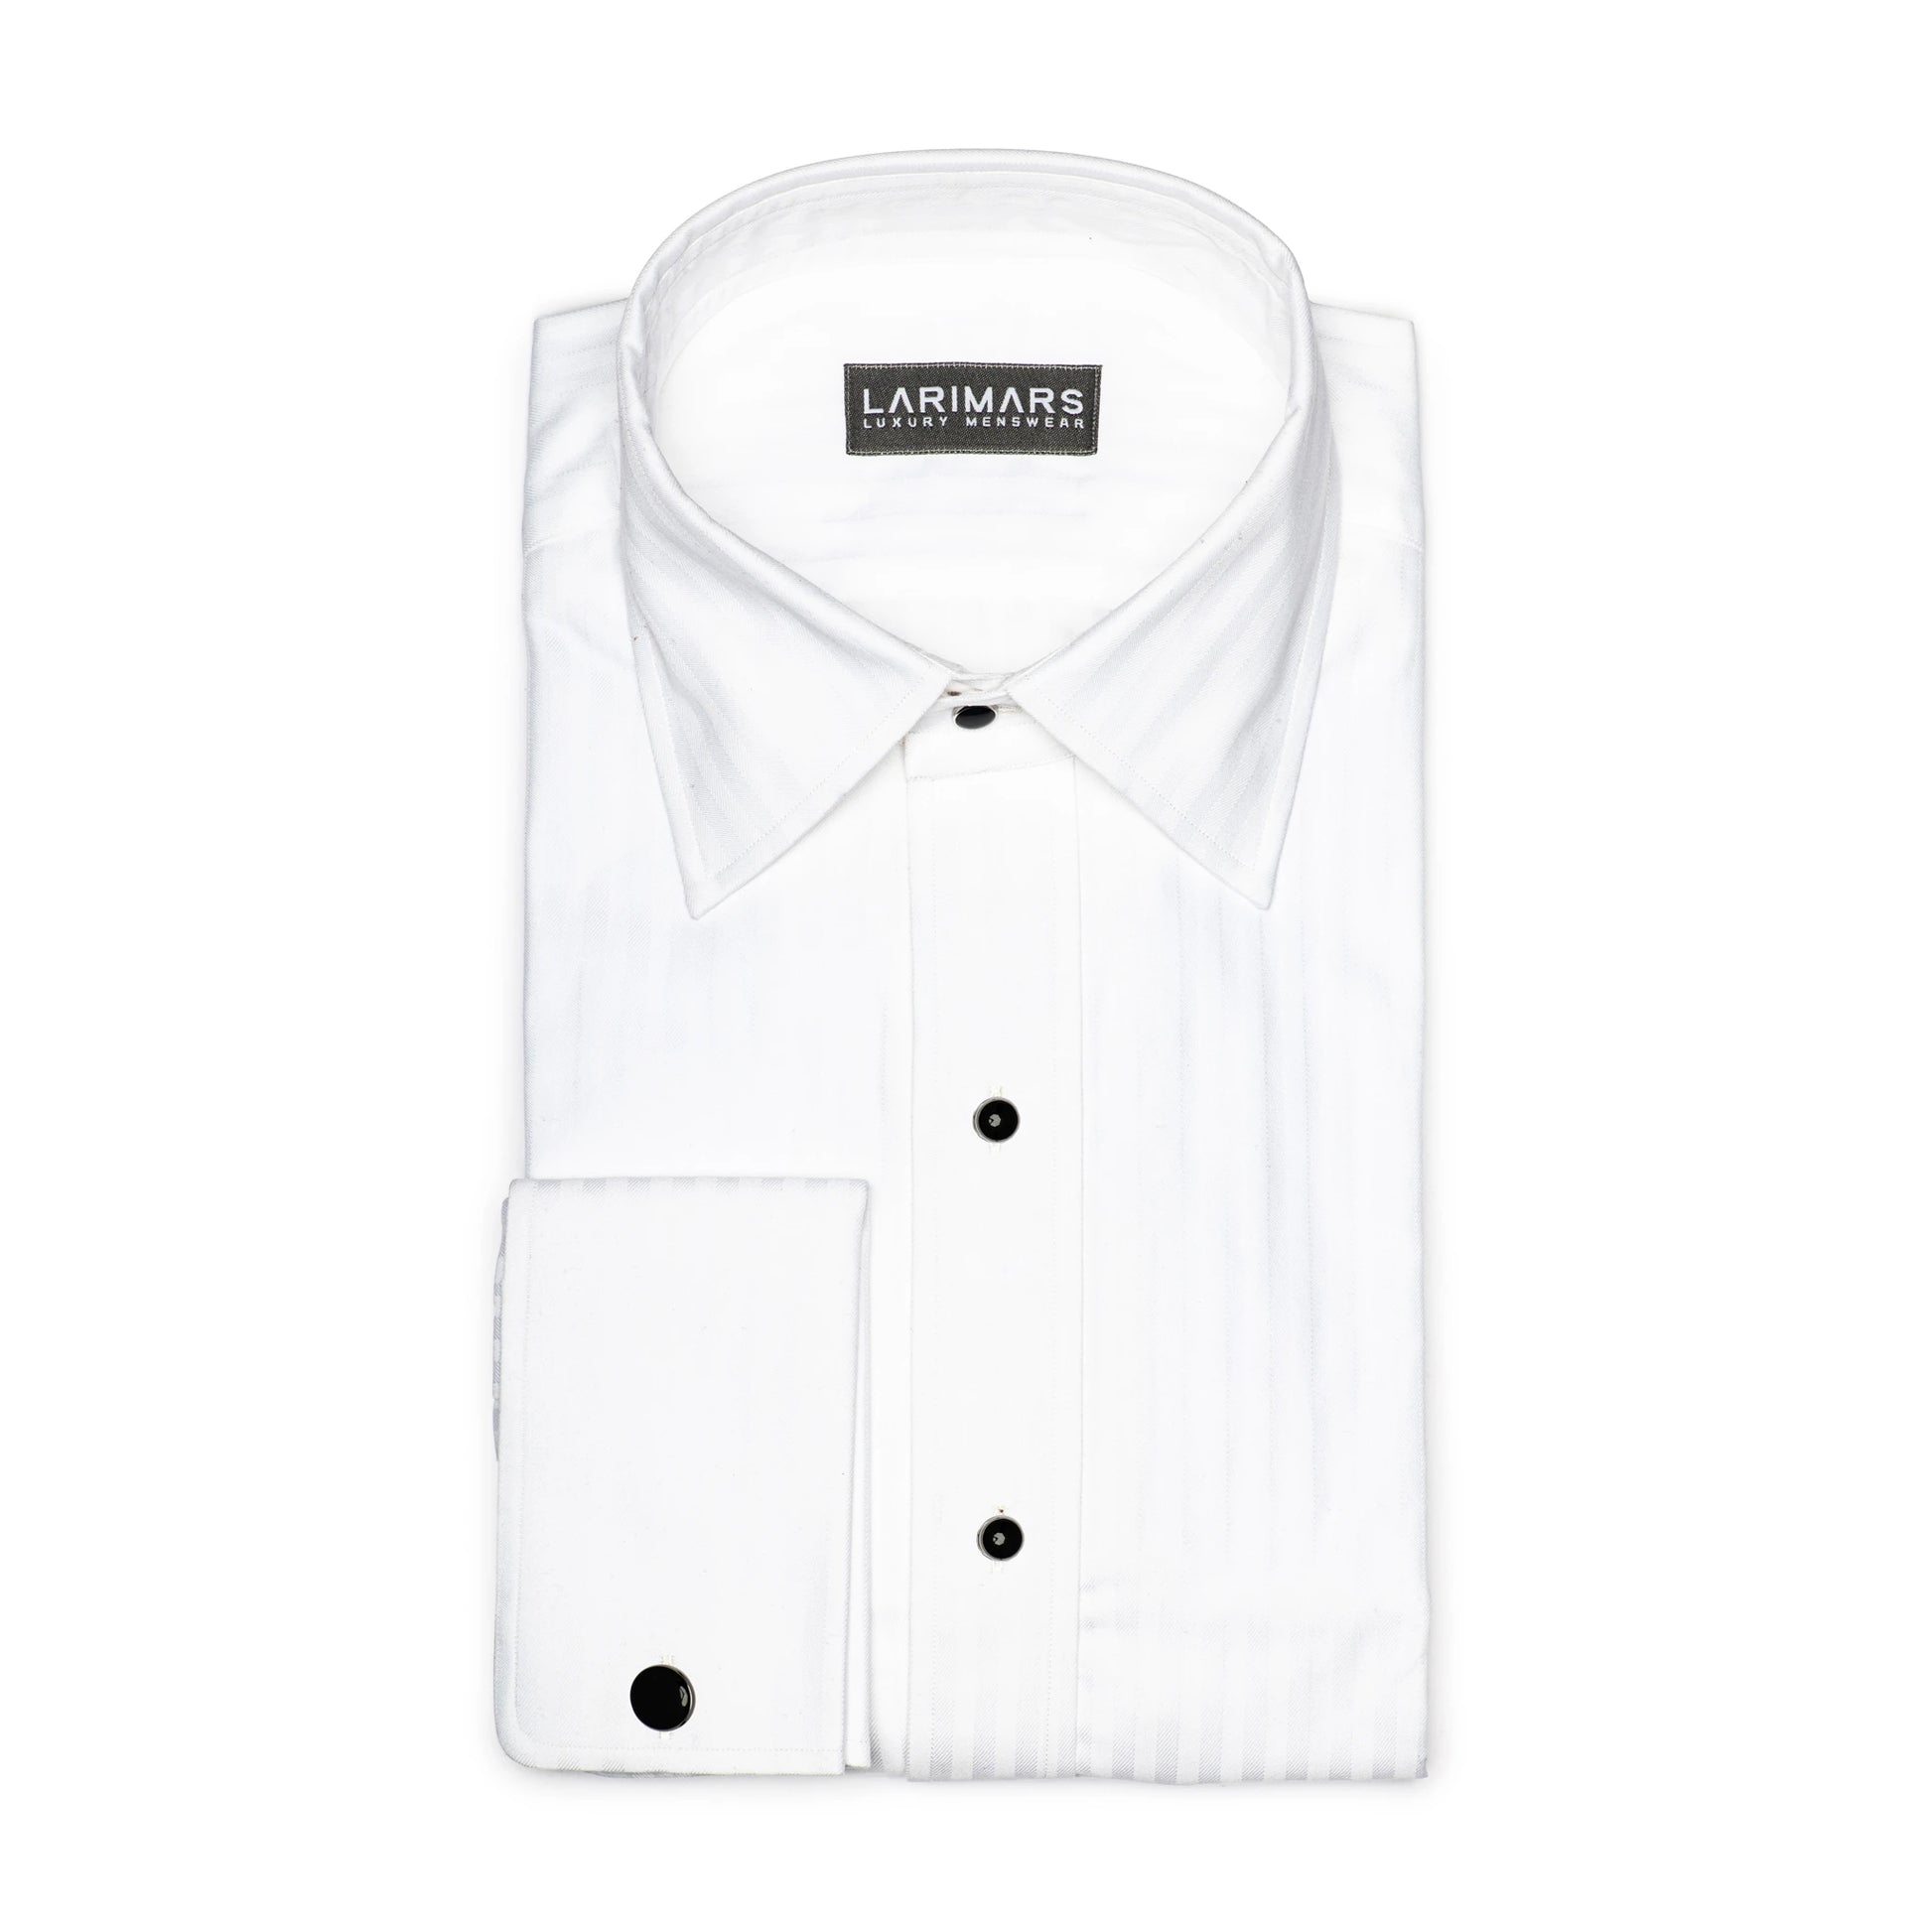 Reverse Satin Stripe Tuxedo Shirt - Larimars Clothing Men's Formal and casual wear shirts